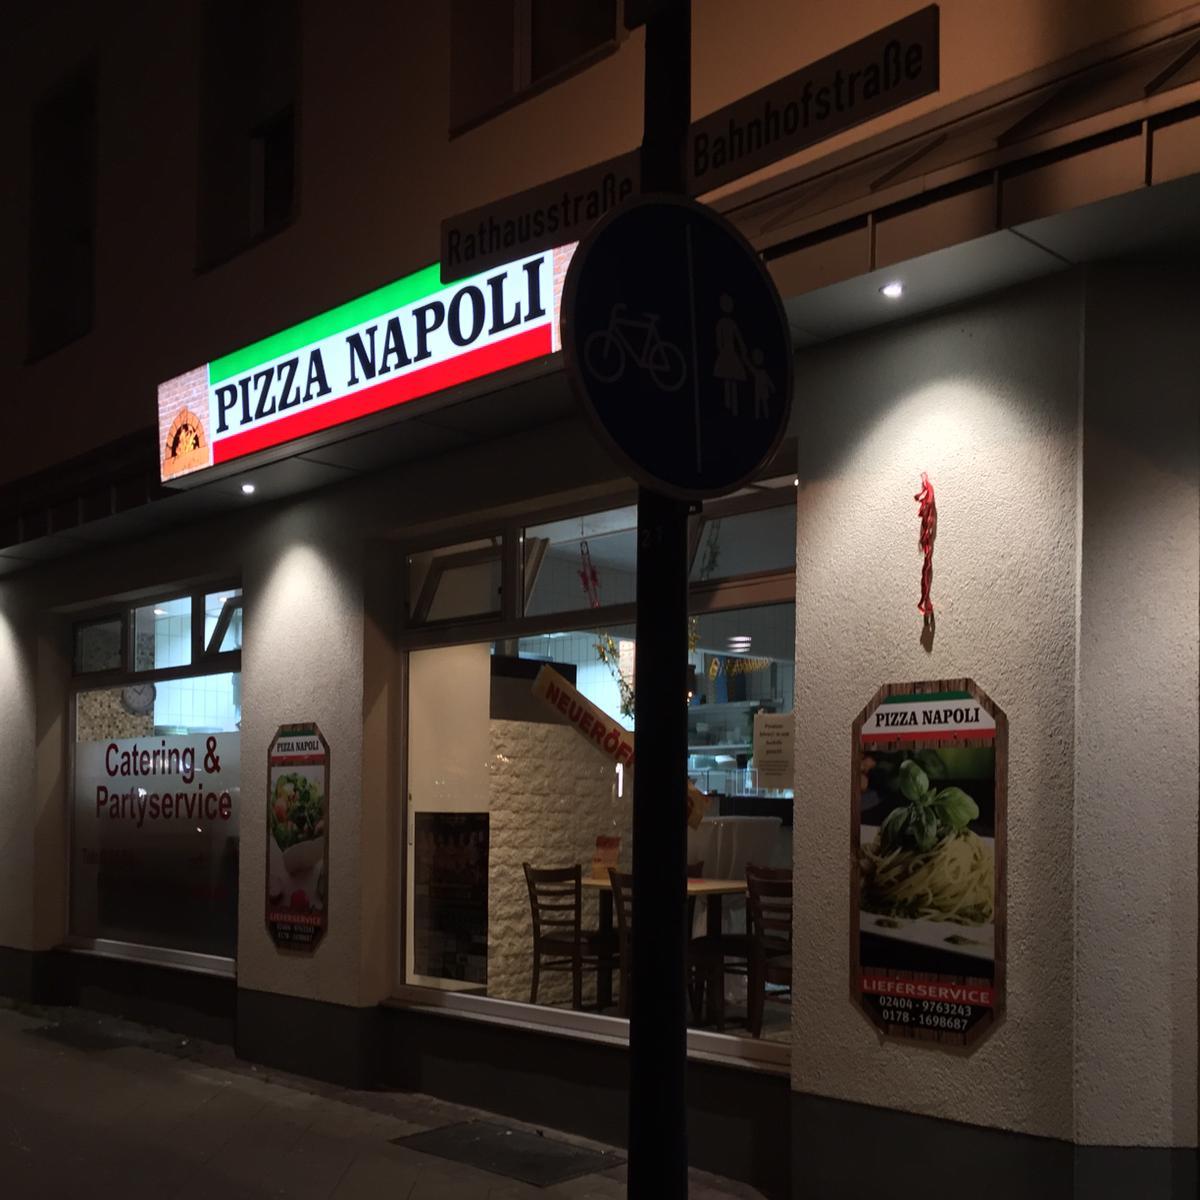 Restaurant "Pizza Napoli" in Alsdorf